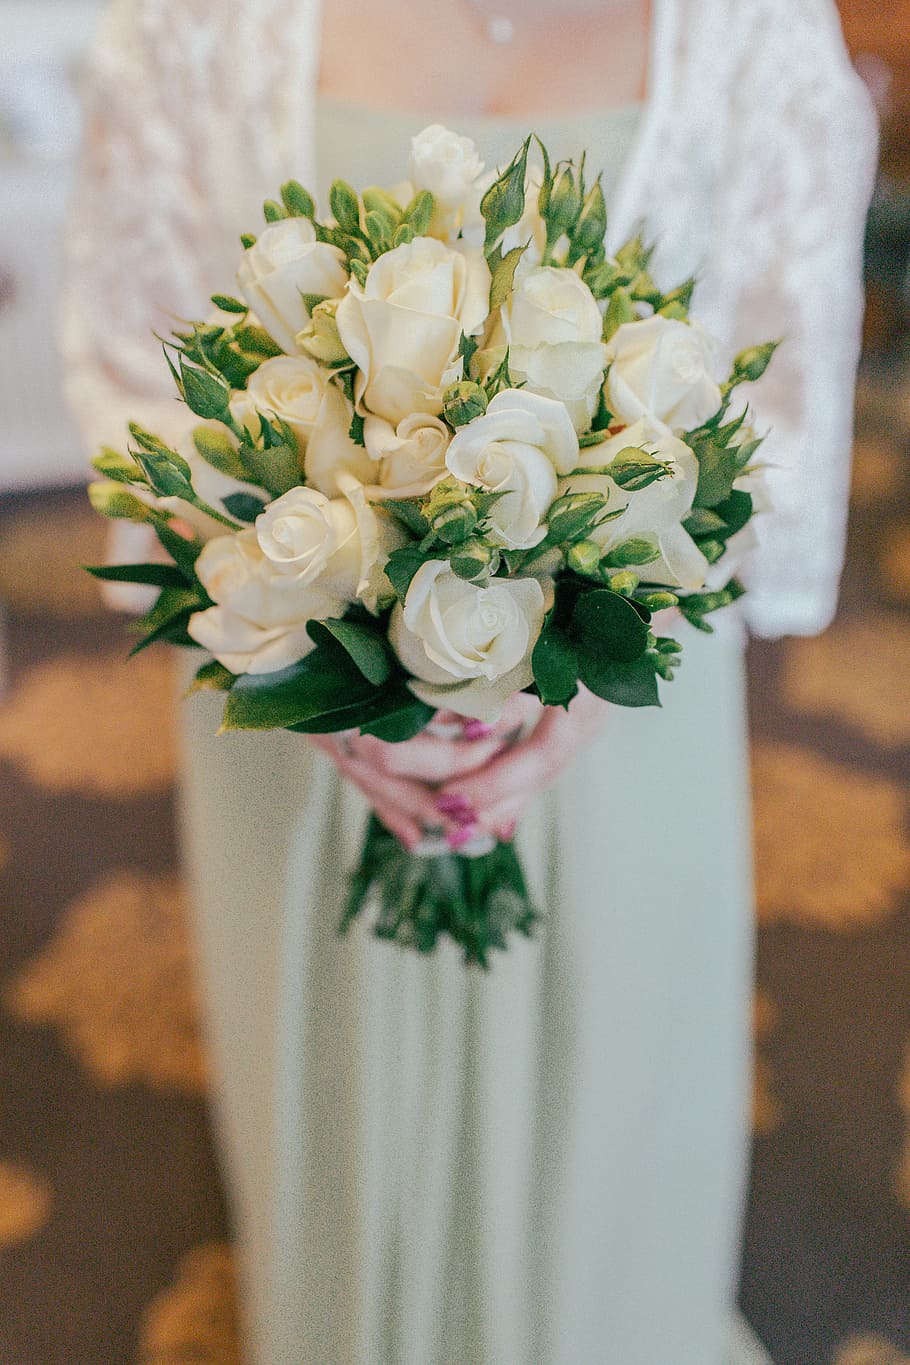 pengantin wanita, pengiring pengantin, pernikahan, bunga, cinta, gaun putih, romantis, tanaman berbunga, rangkaian bunga, karangan bunga